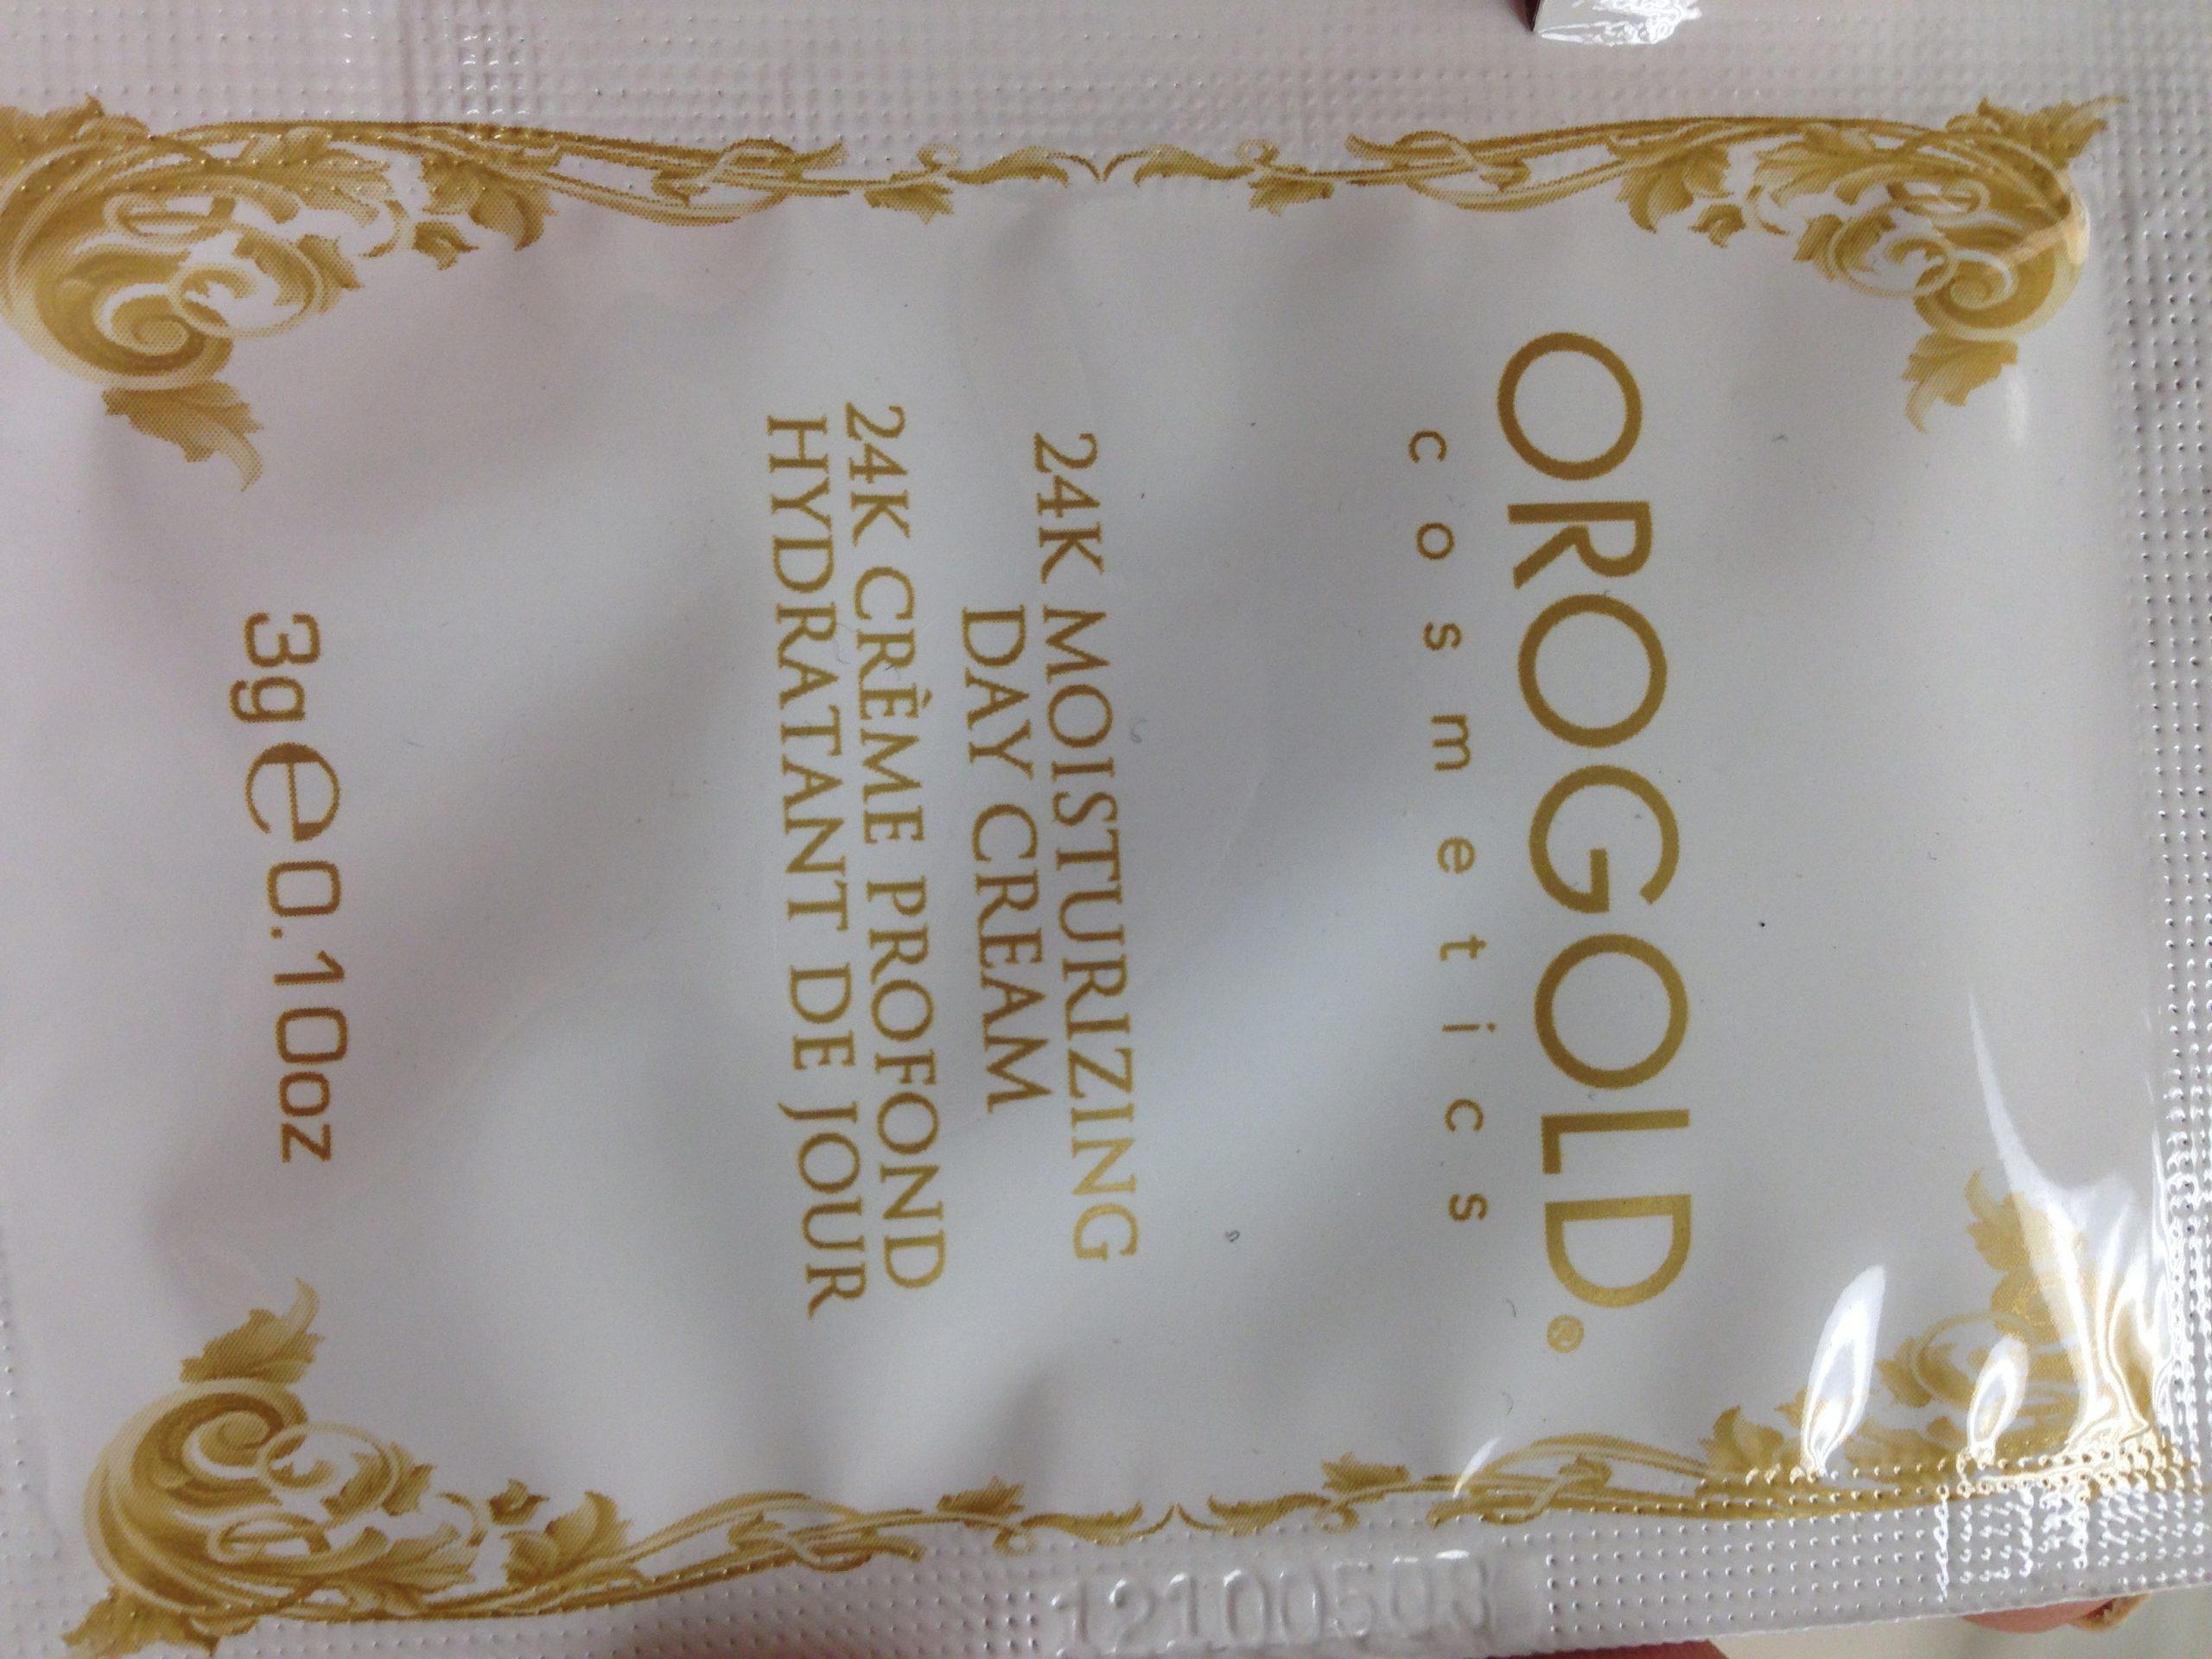 OROGOLD moisturizing day cream